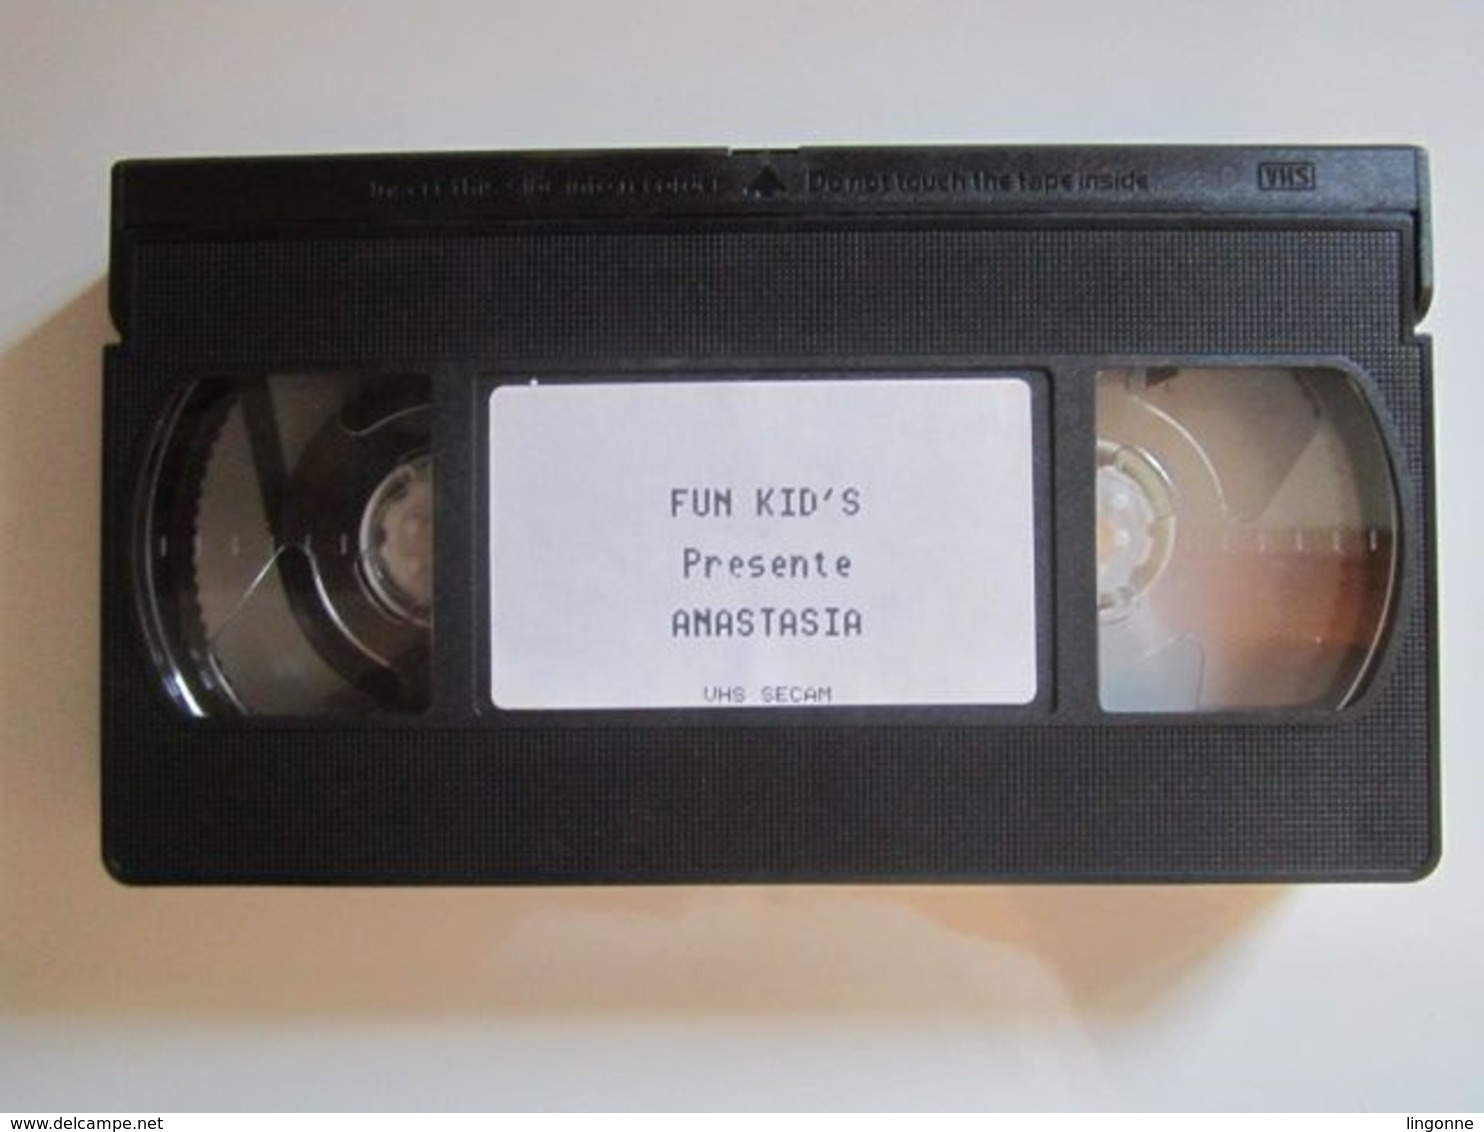 1998 CASSETTE VIDEO VHS  ANASTASIA - Cartoni Animati